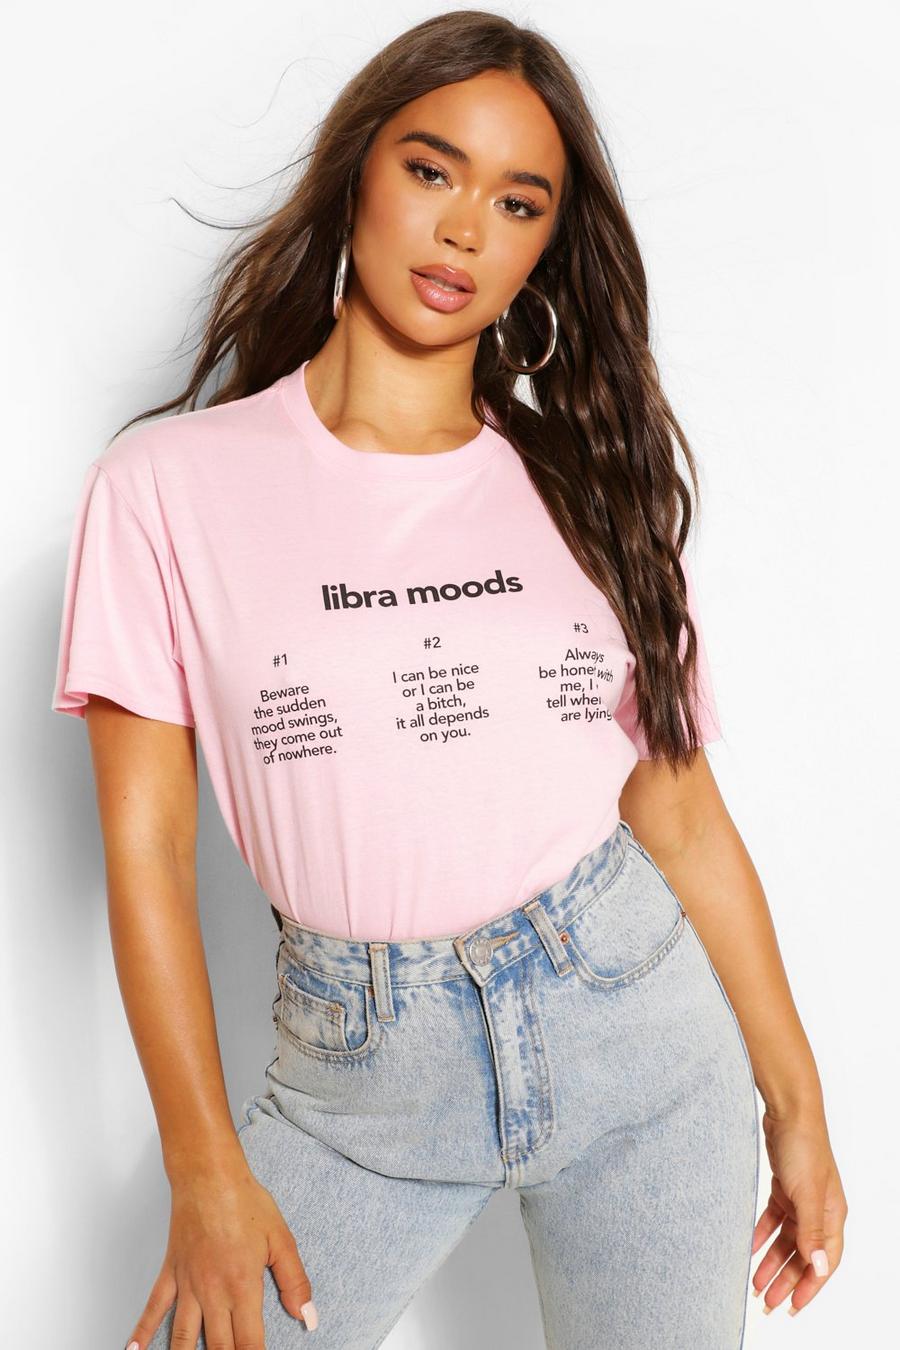 T-shirt horoscope "Libra moods", Pink image number 1